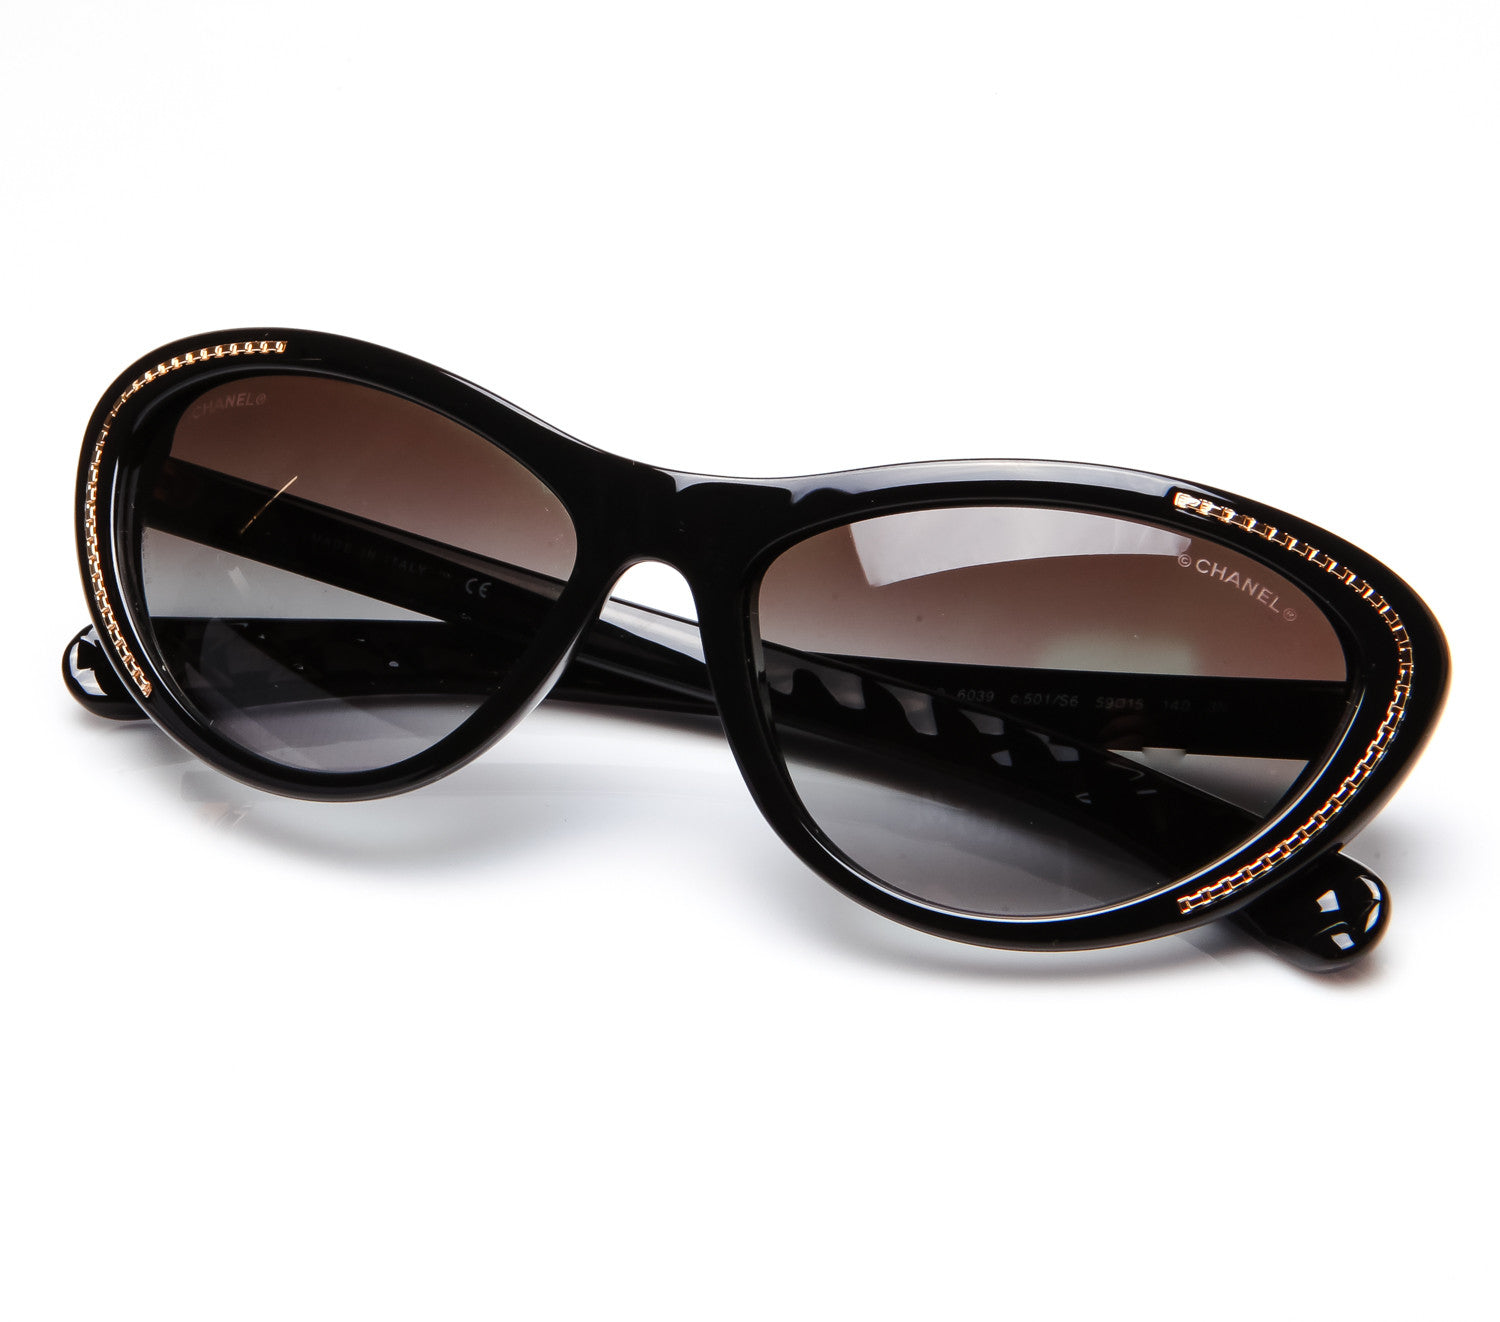 CHANEL 3423 501 51mm Eyewear FRAMES Eyeglasses RX Optical Glasses - New  Italy - GGV Eyewear